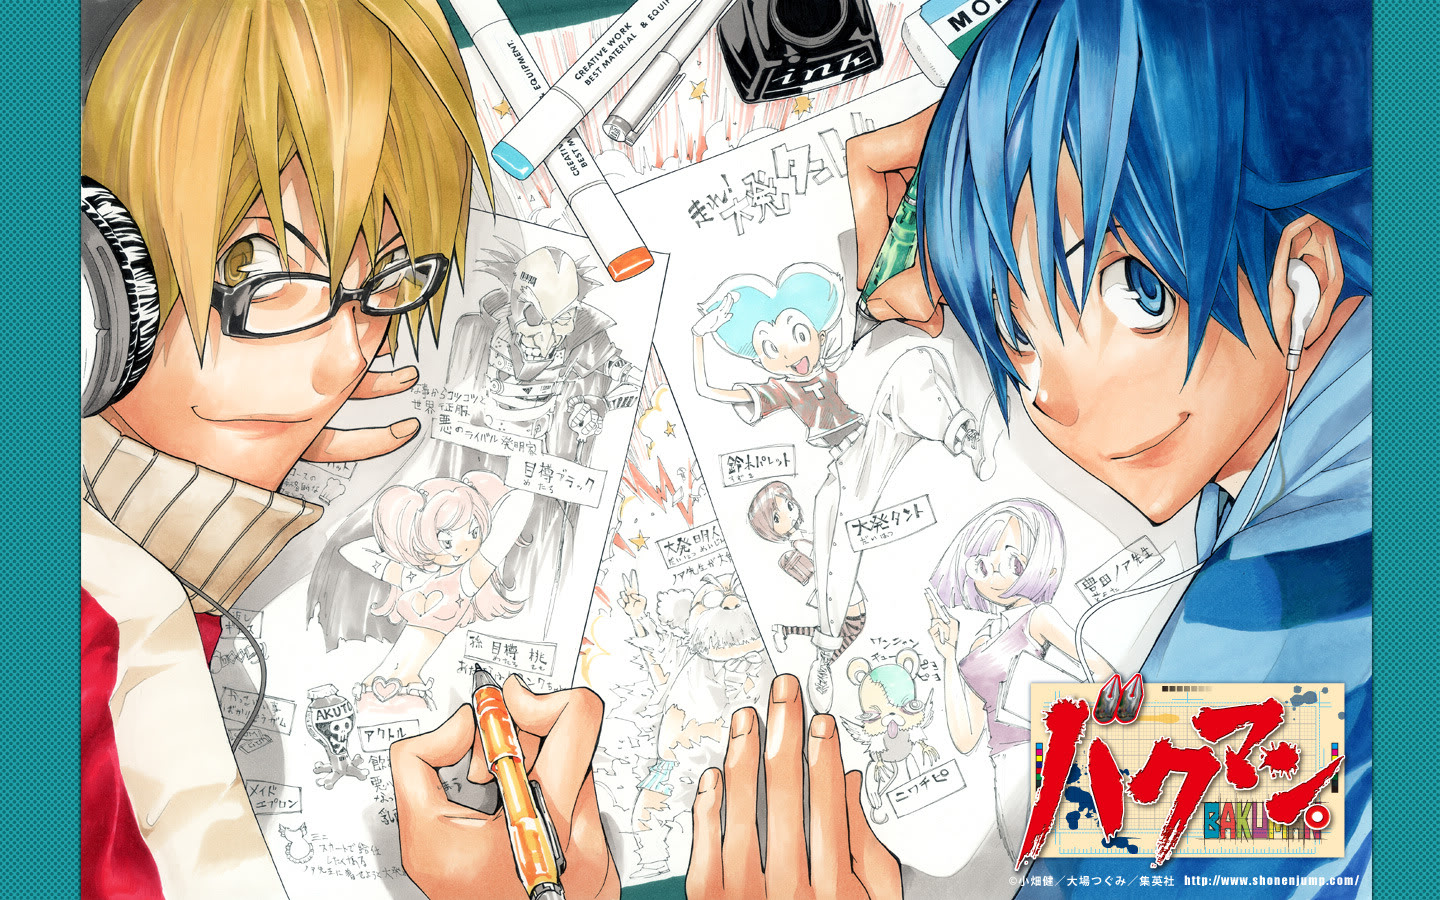 Cerita Di Balik Kesuksesan Manga (Komik Jepang)